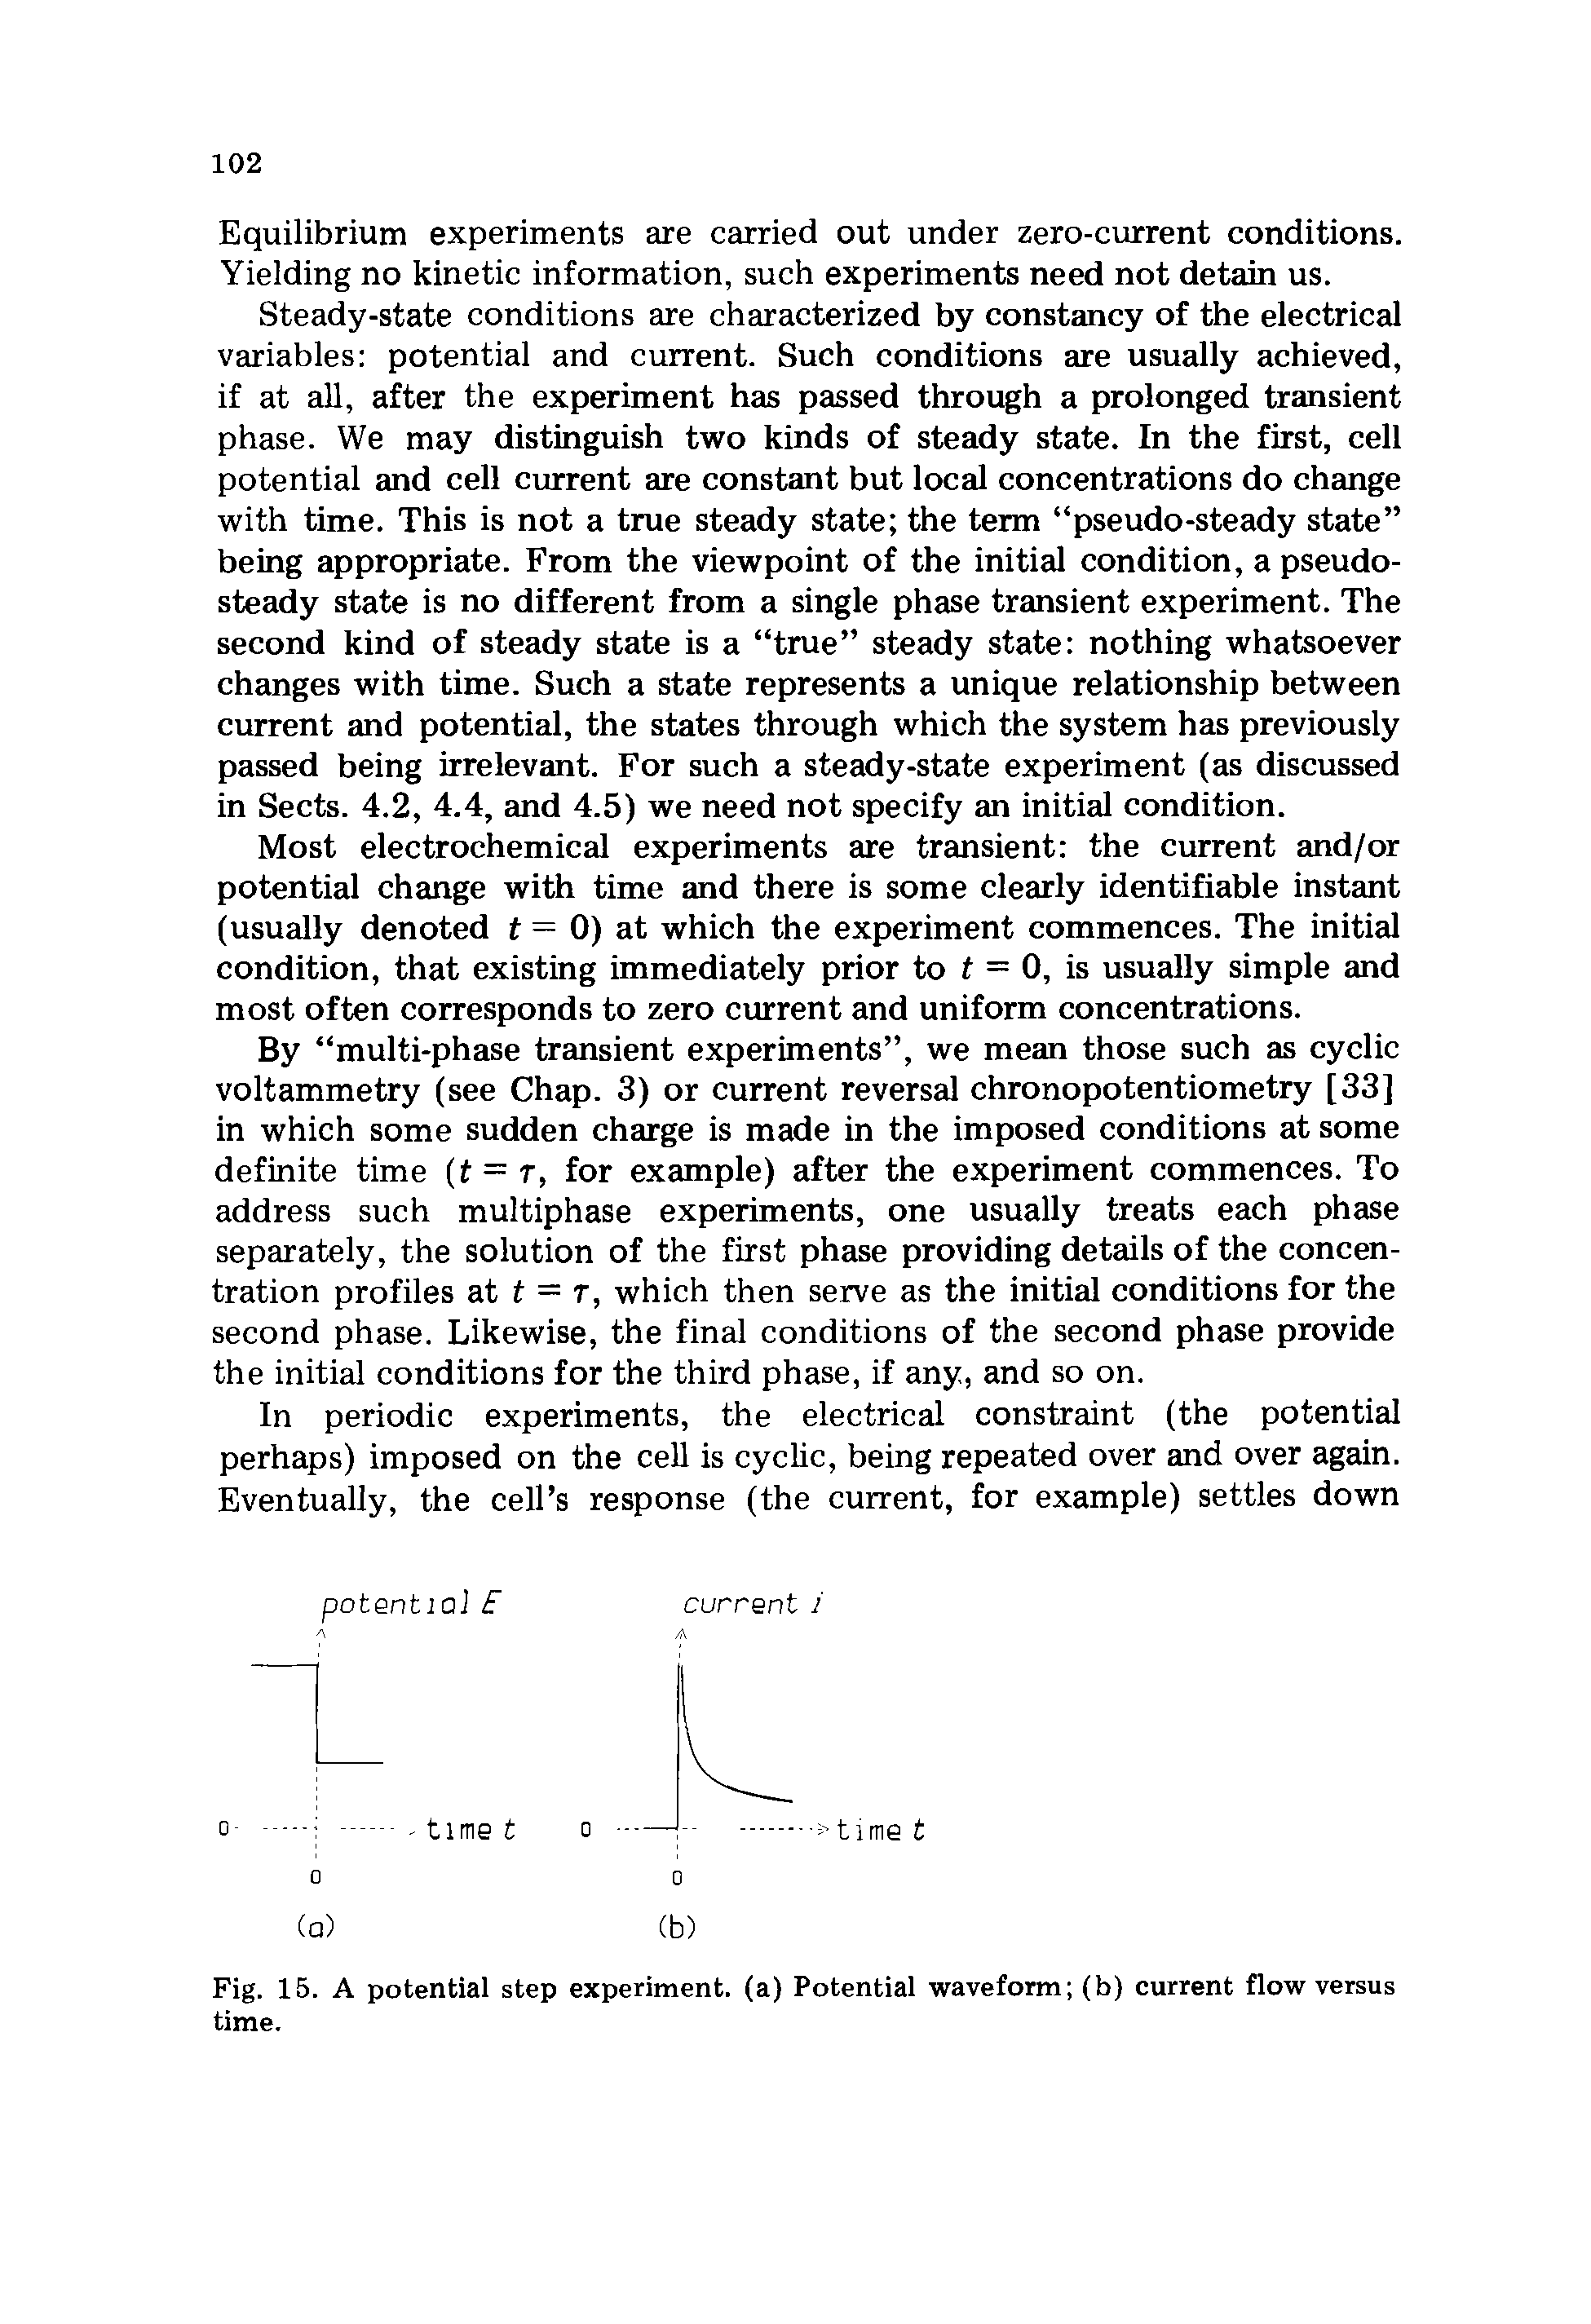 Fig. 15. A potential step experiment, (a) Potential waveform (b) current flow versus time.